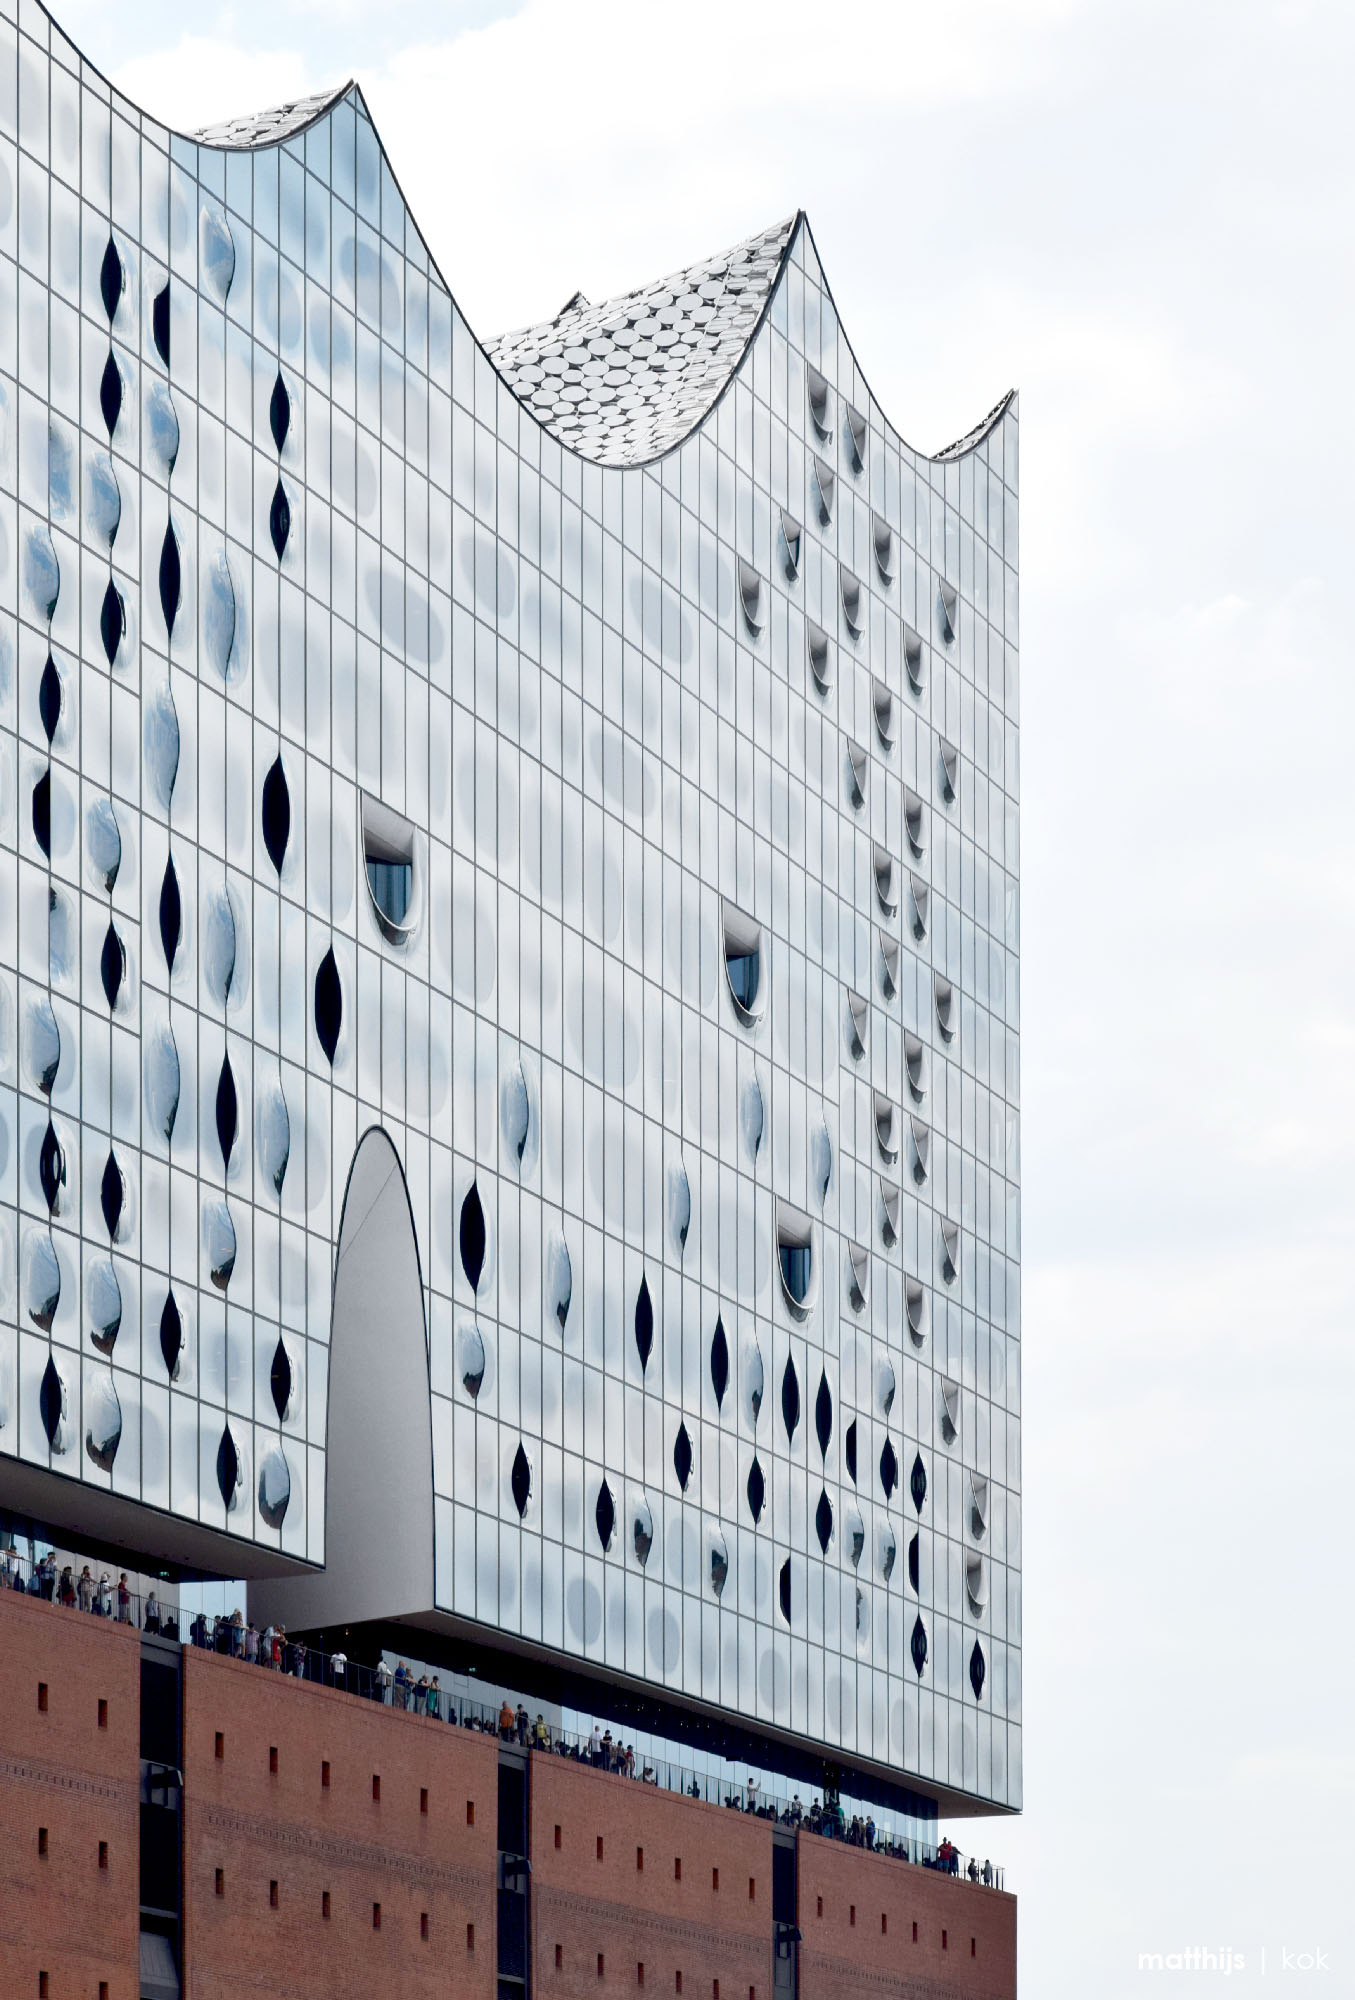 Elbphilharmonie Architecture Detail, Hamburg, Germany| Photo by Matthijs Kok